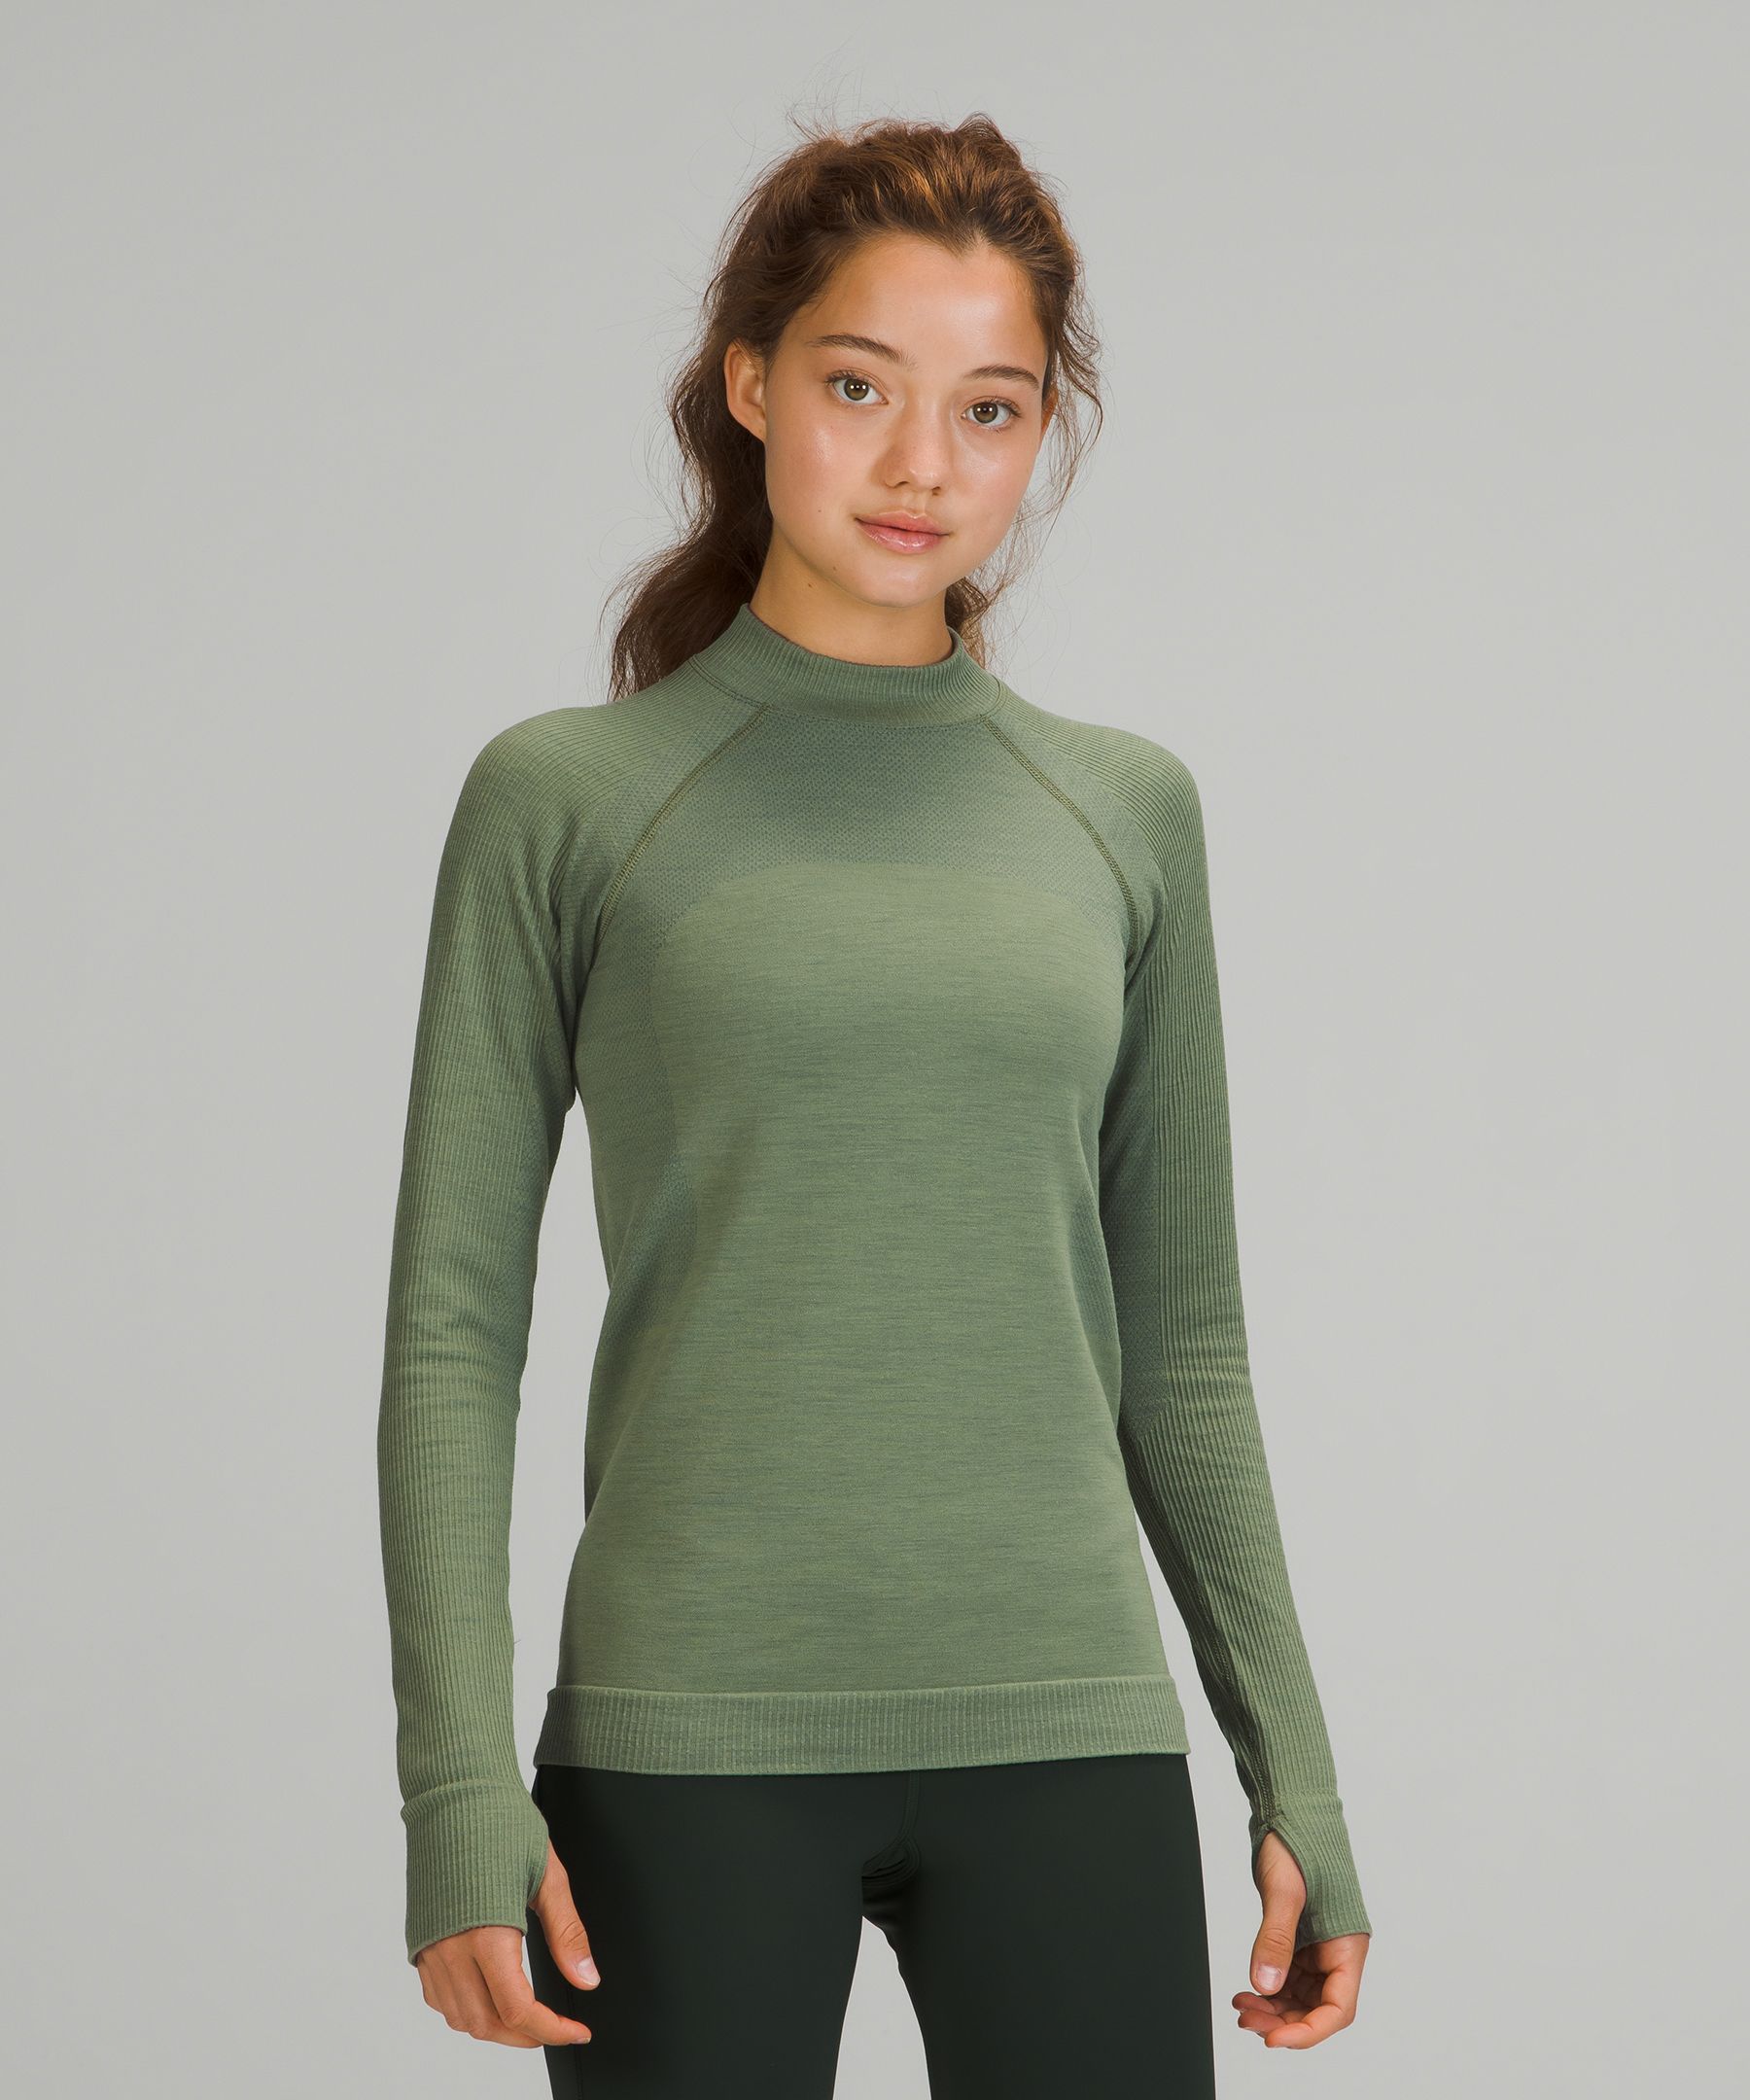 Lululemon Keep The Heat Thermal Long Sleeve Shirt In Green Twill